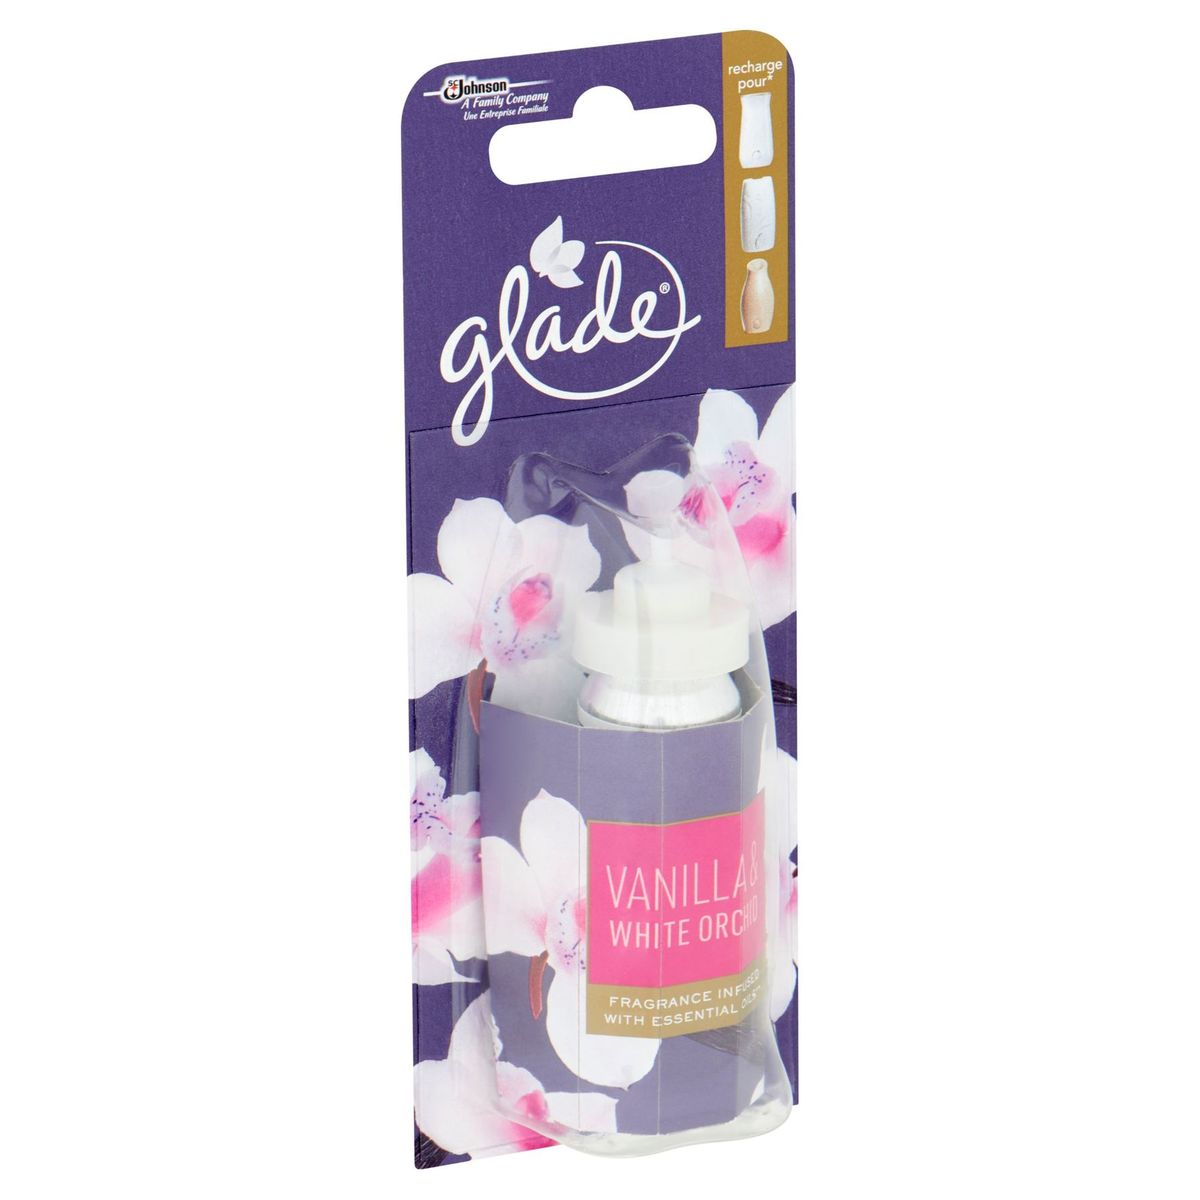 Glade Vanilla & White Orchid 18 ml